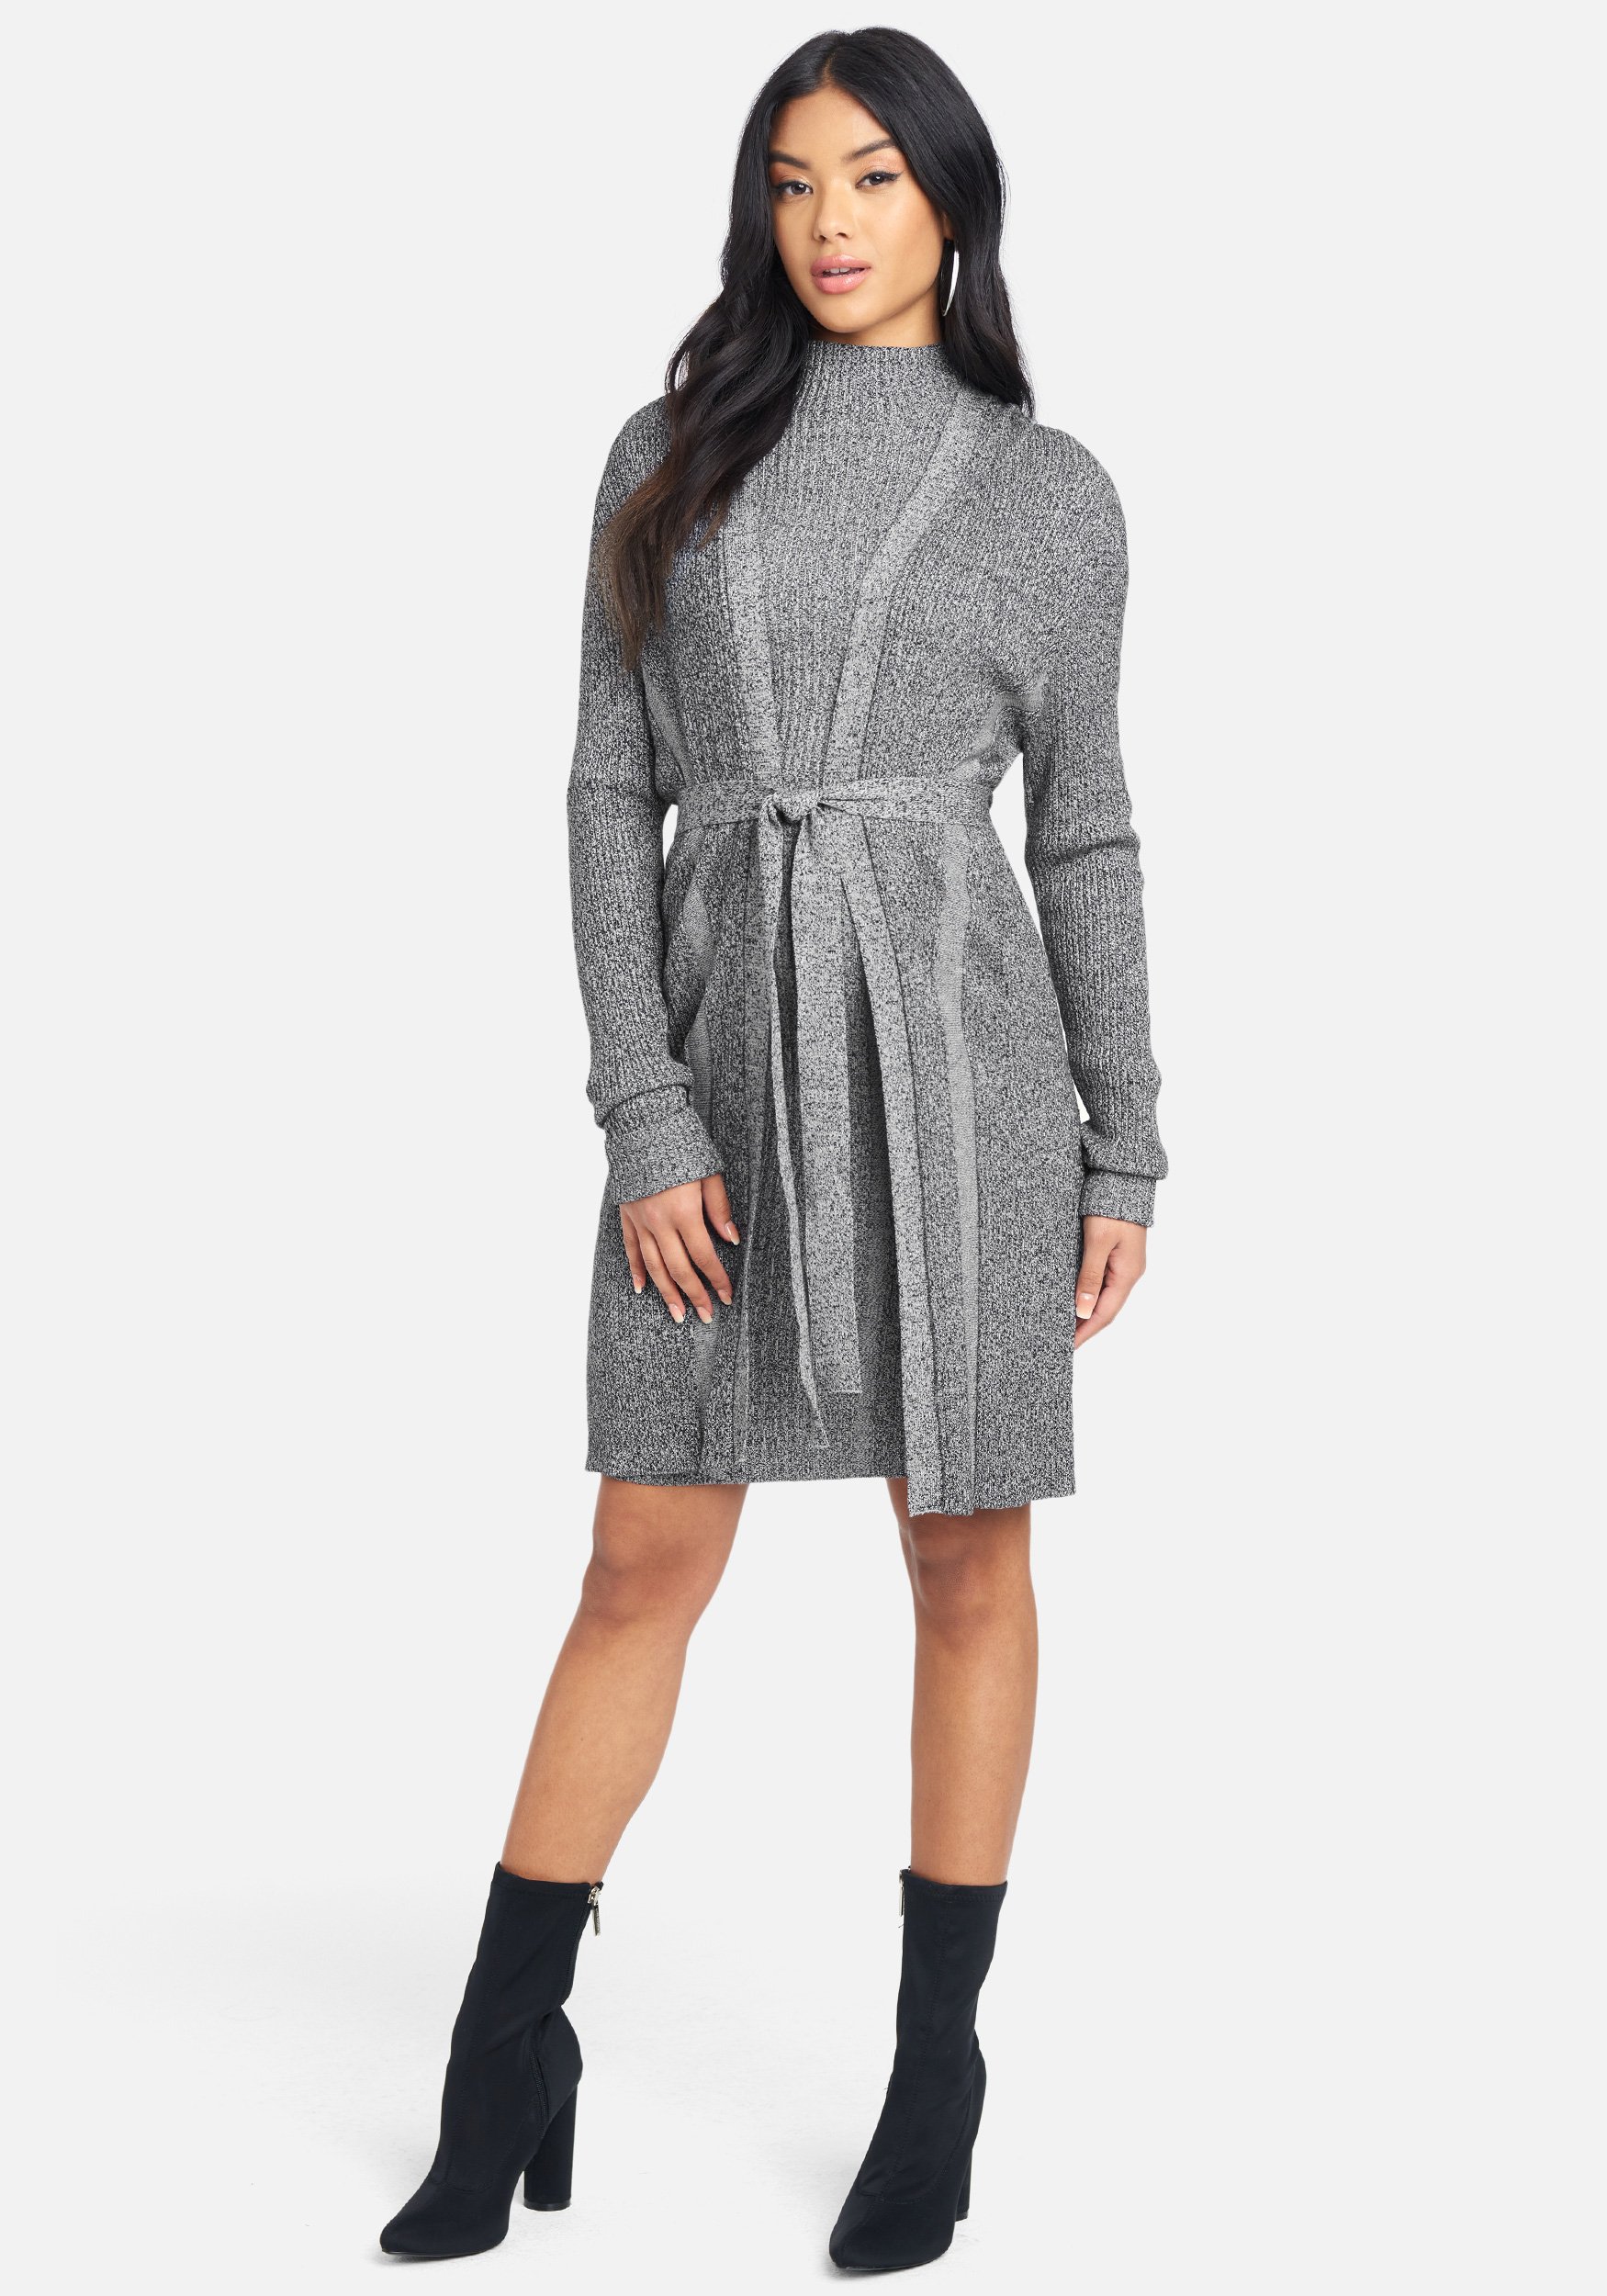 Bebe Women's MÃ©lange Knit Hooded Sweater Cardigan, Size Medium in Silver Grey Viscose/Nylon